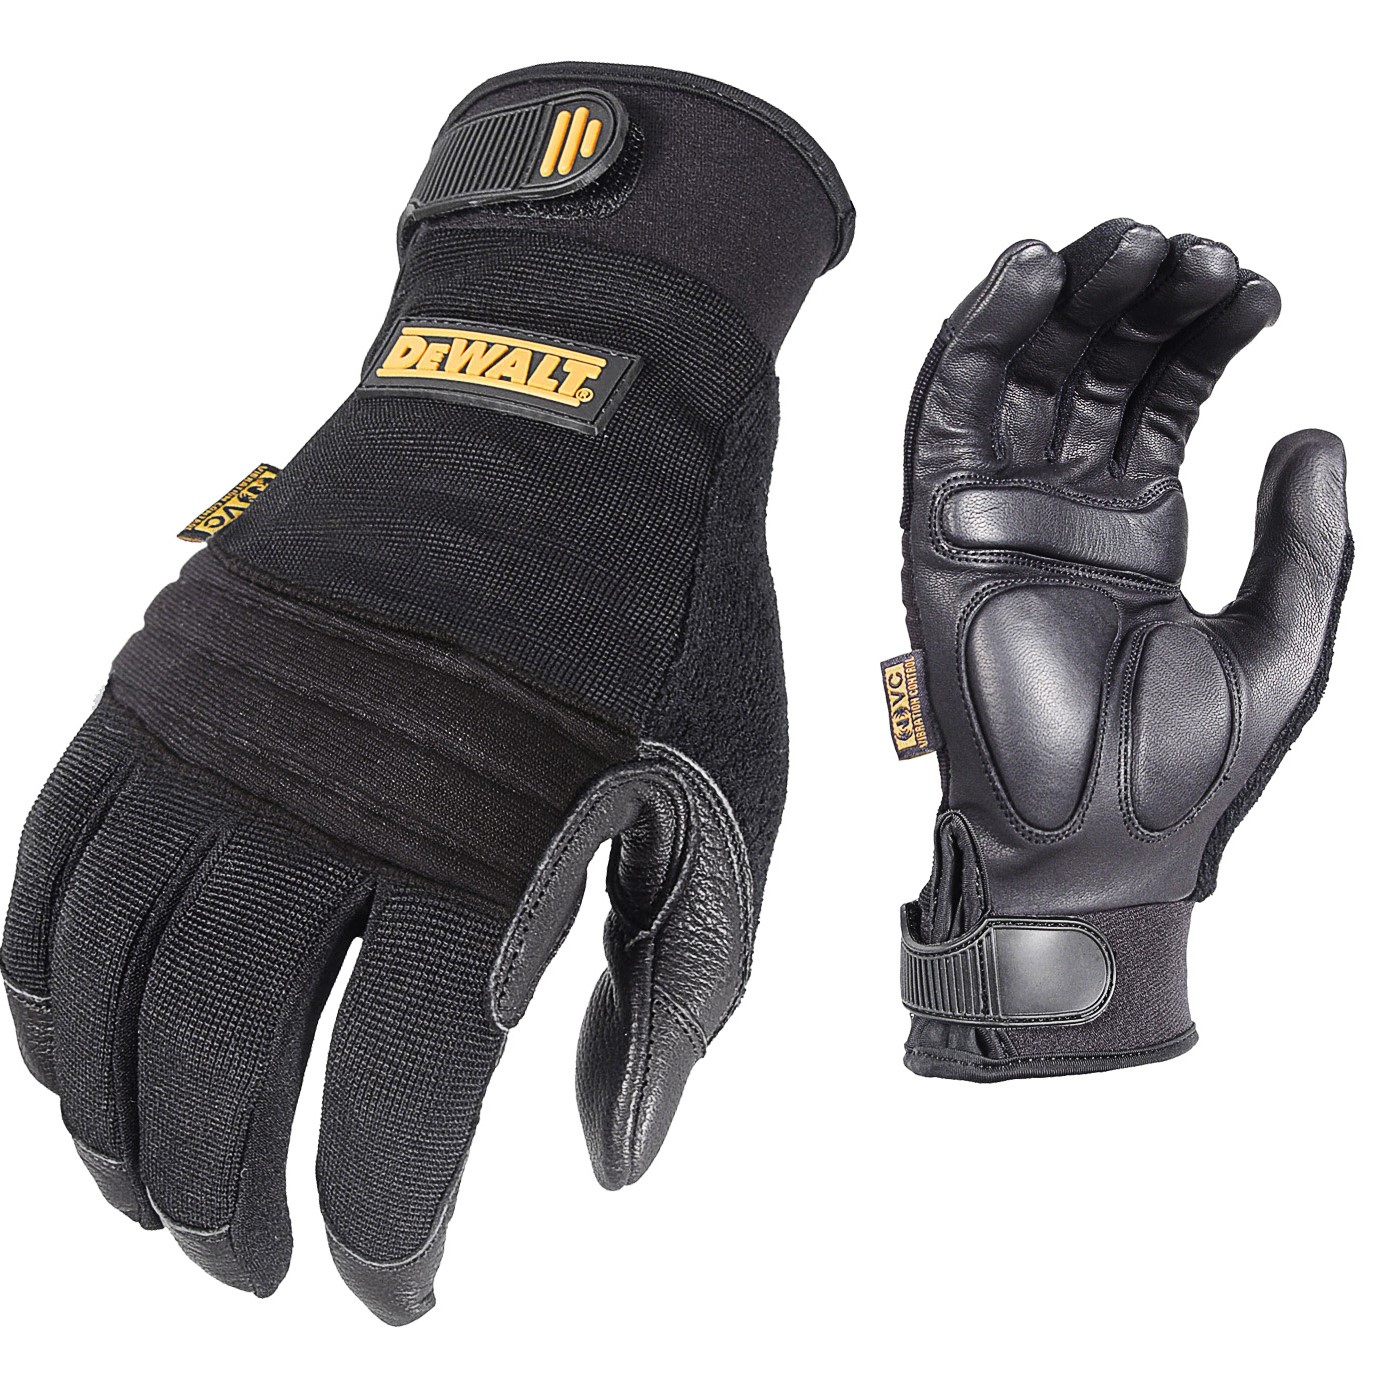 DPG250 Premium Padded Vibration Reducing Glove - Size L